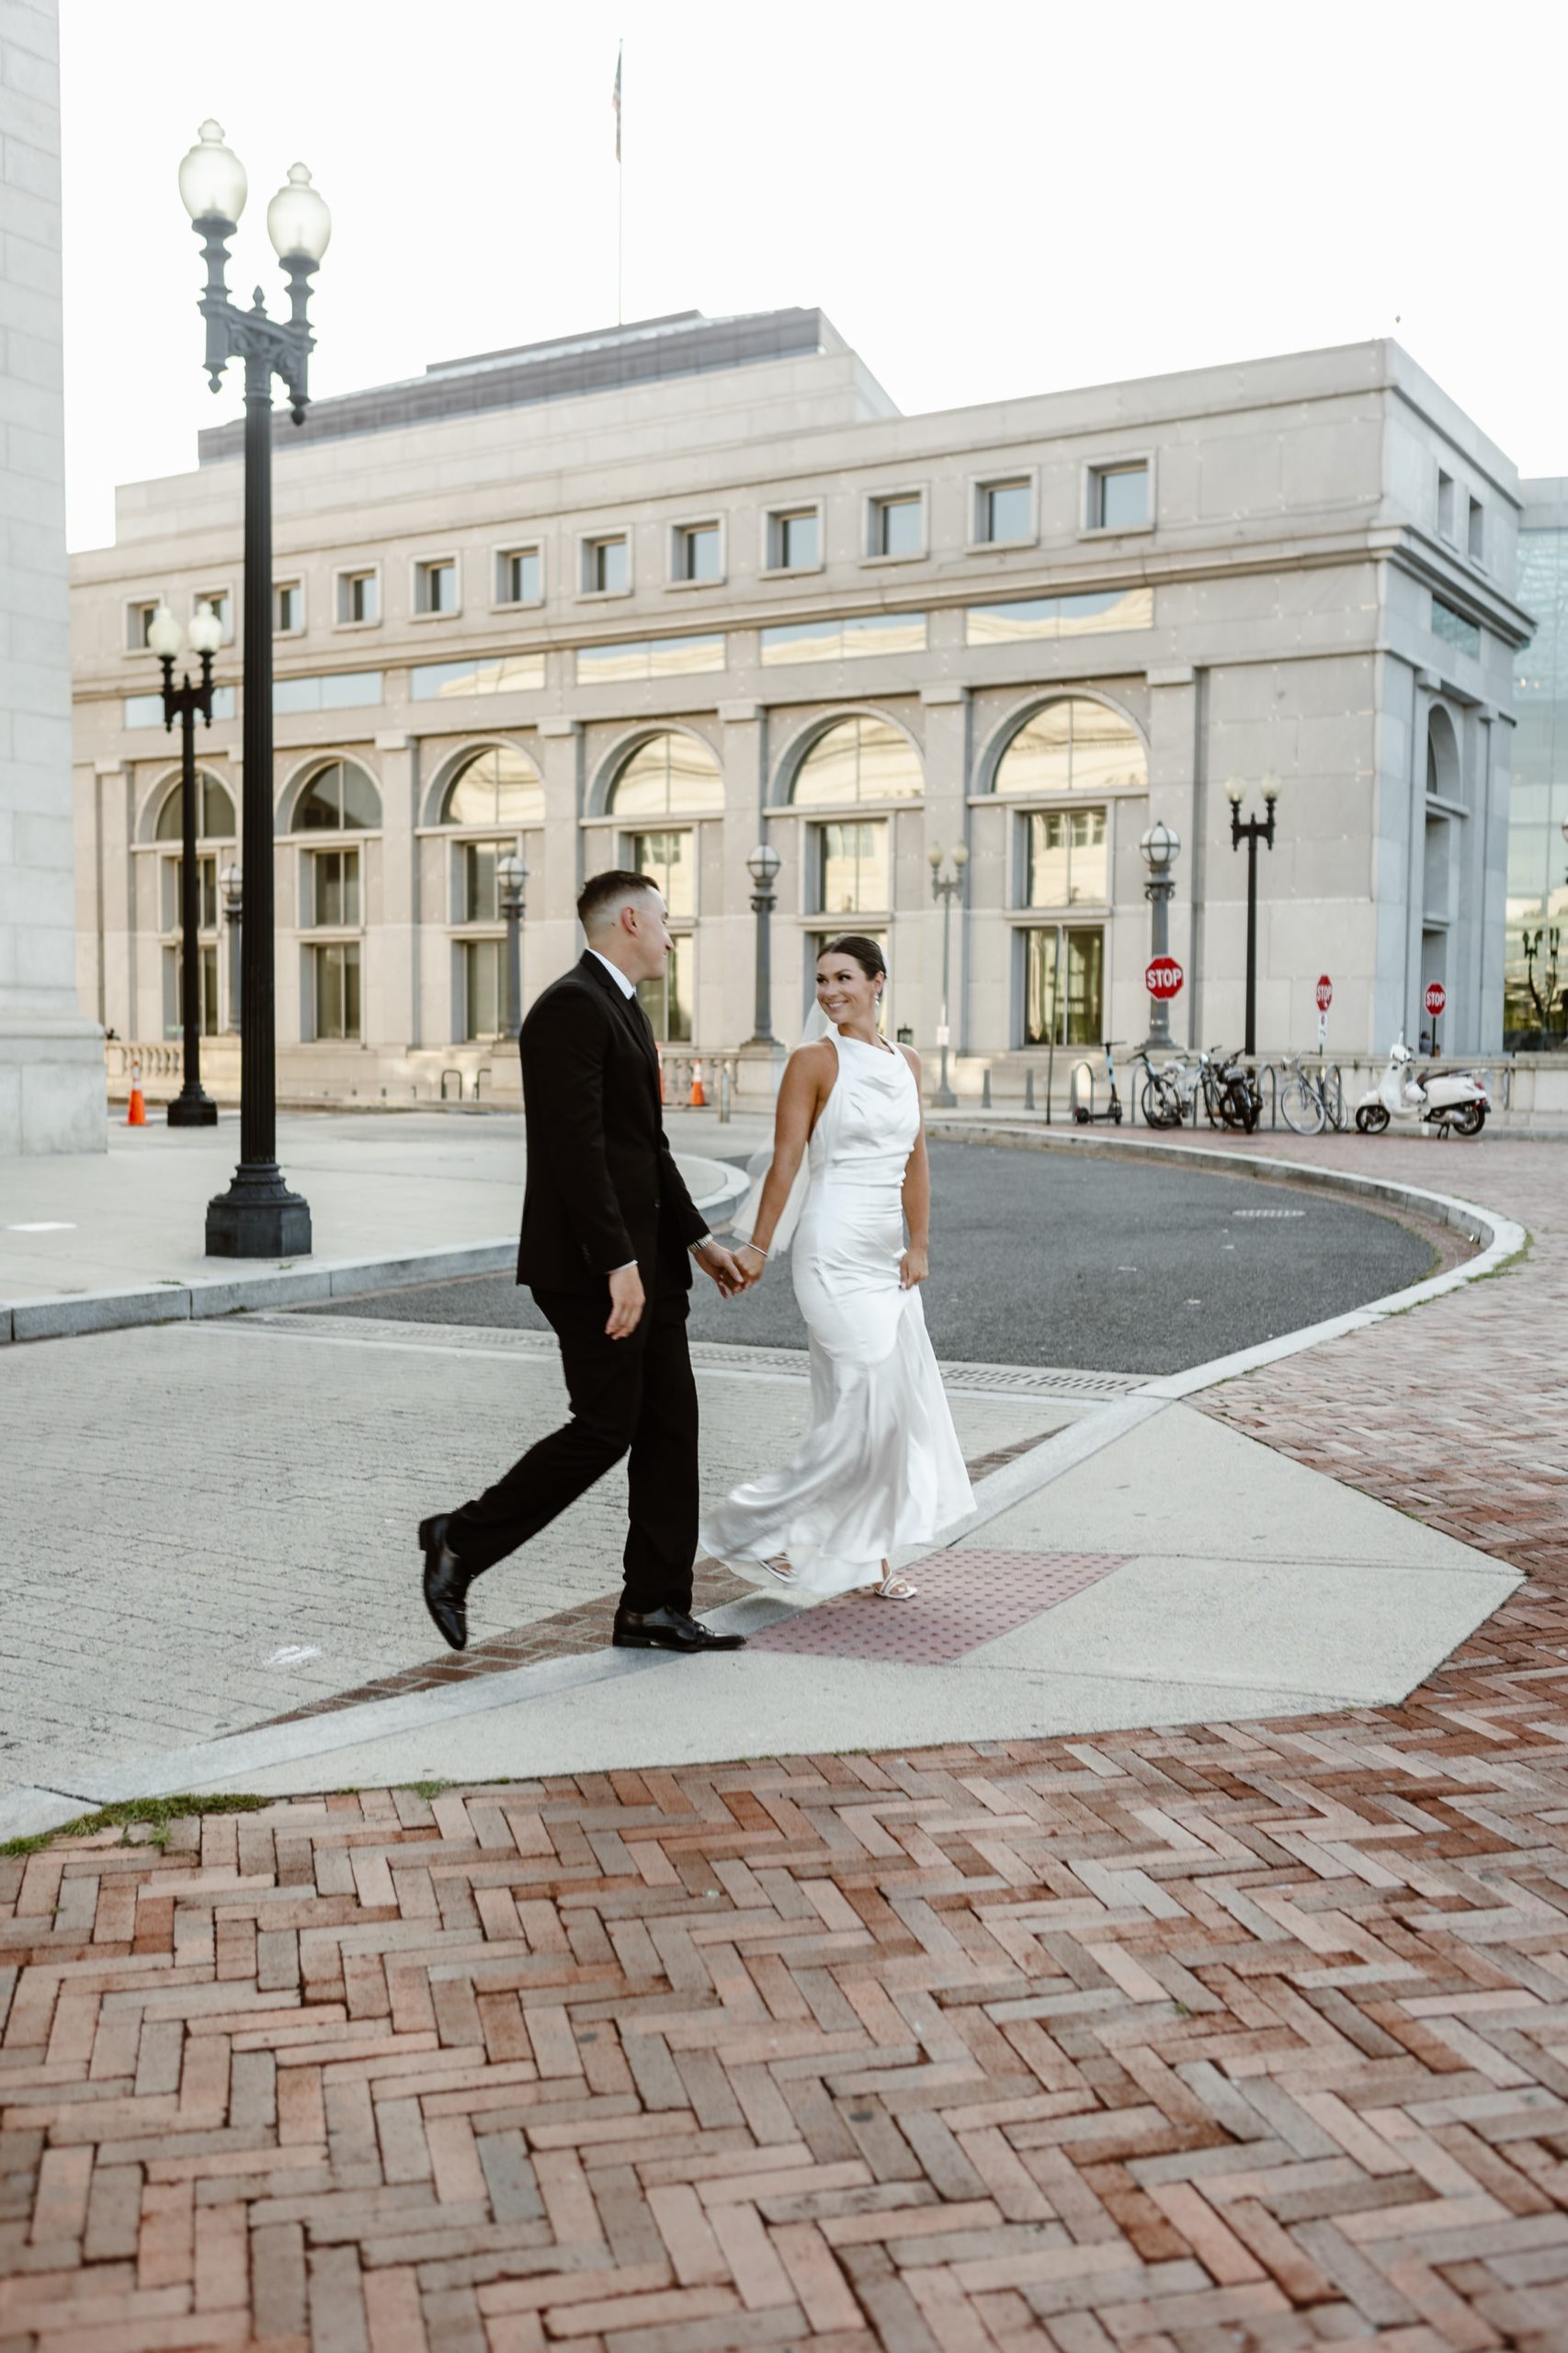 Wedding couple walks across the street at Union Station, DC. 